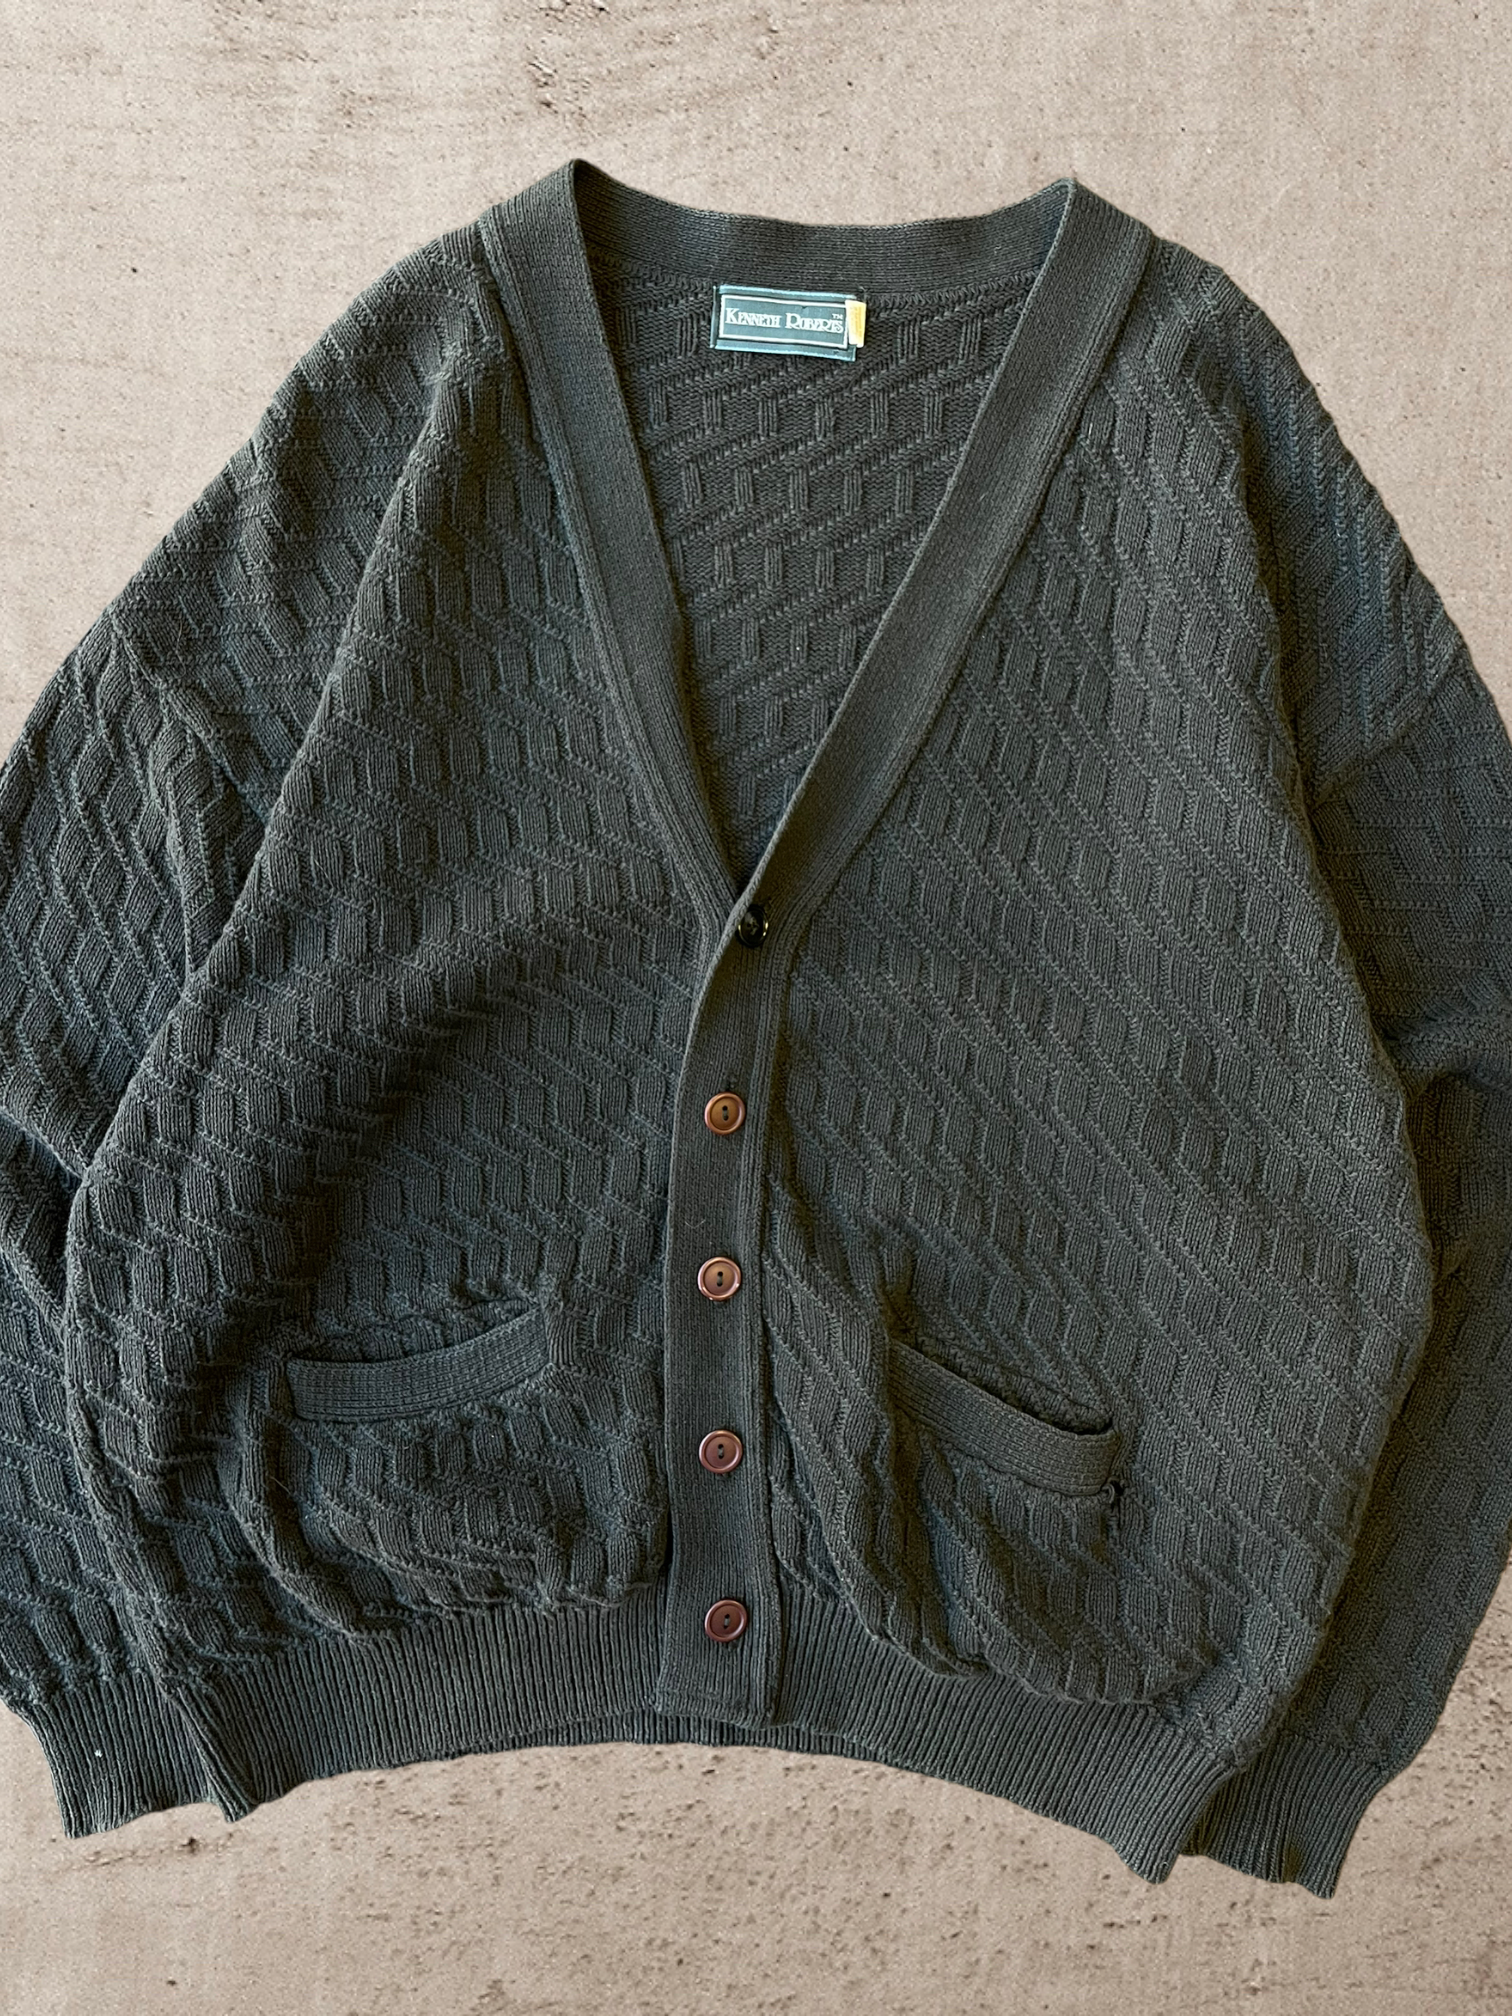 90s Knit Cardigan - Large/X-Large